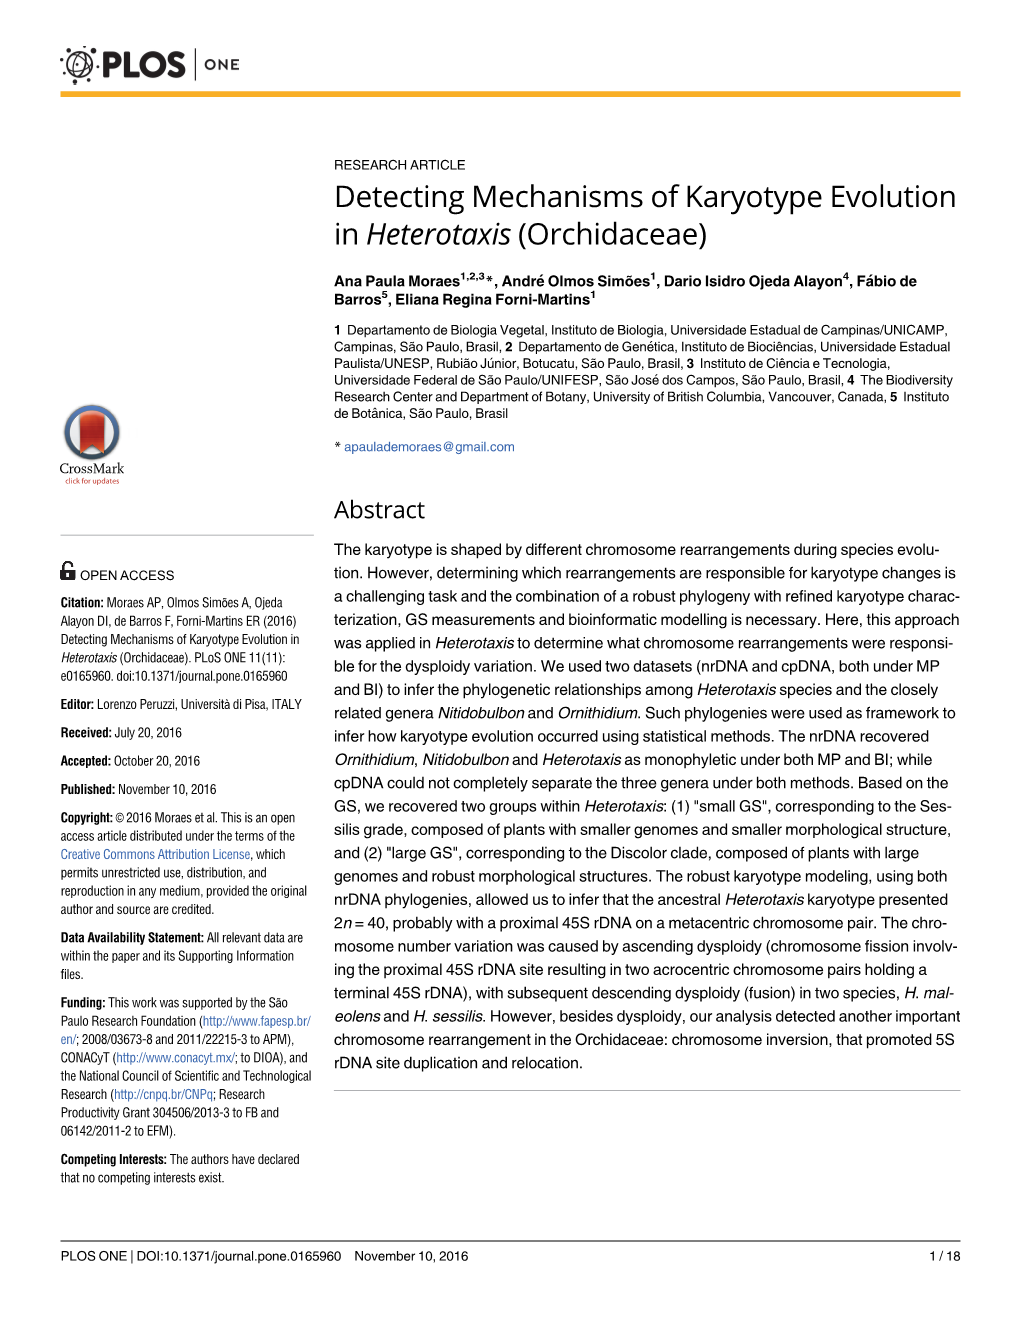 Detecting Mechanisms of Karyotype Evolution in Heterotaxis (Orchidaceae)